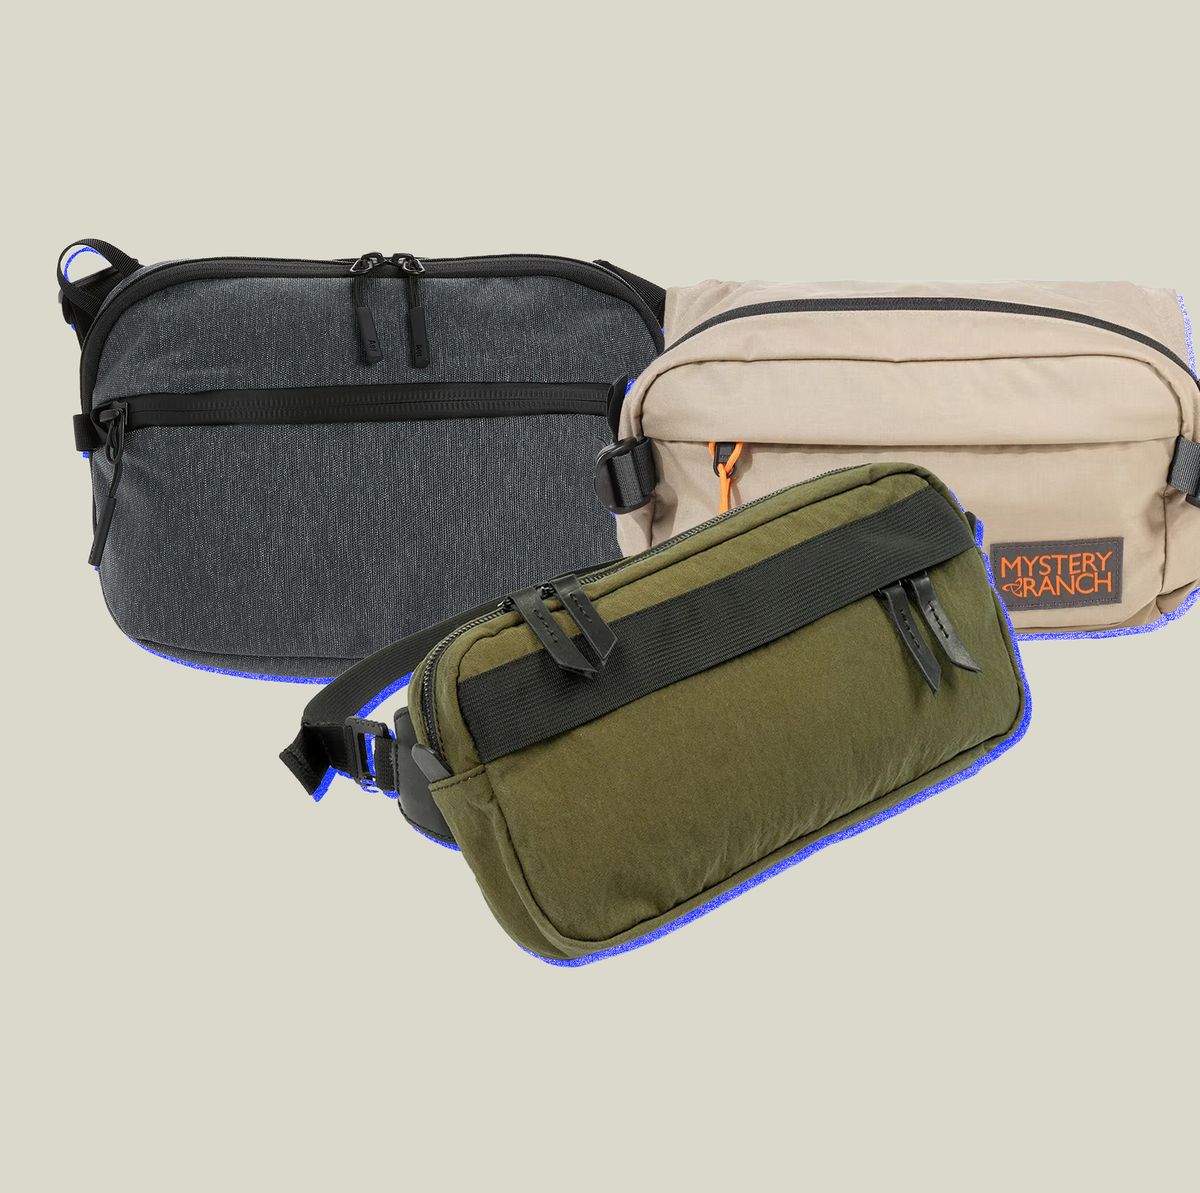 Small Crossbody Bag For Men, Mini Side Shoulder Bag Lightweight